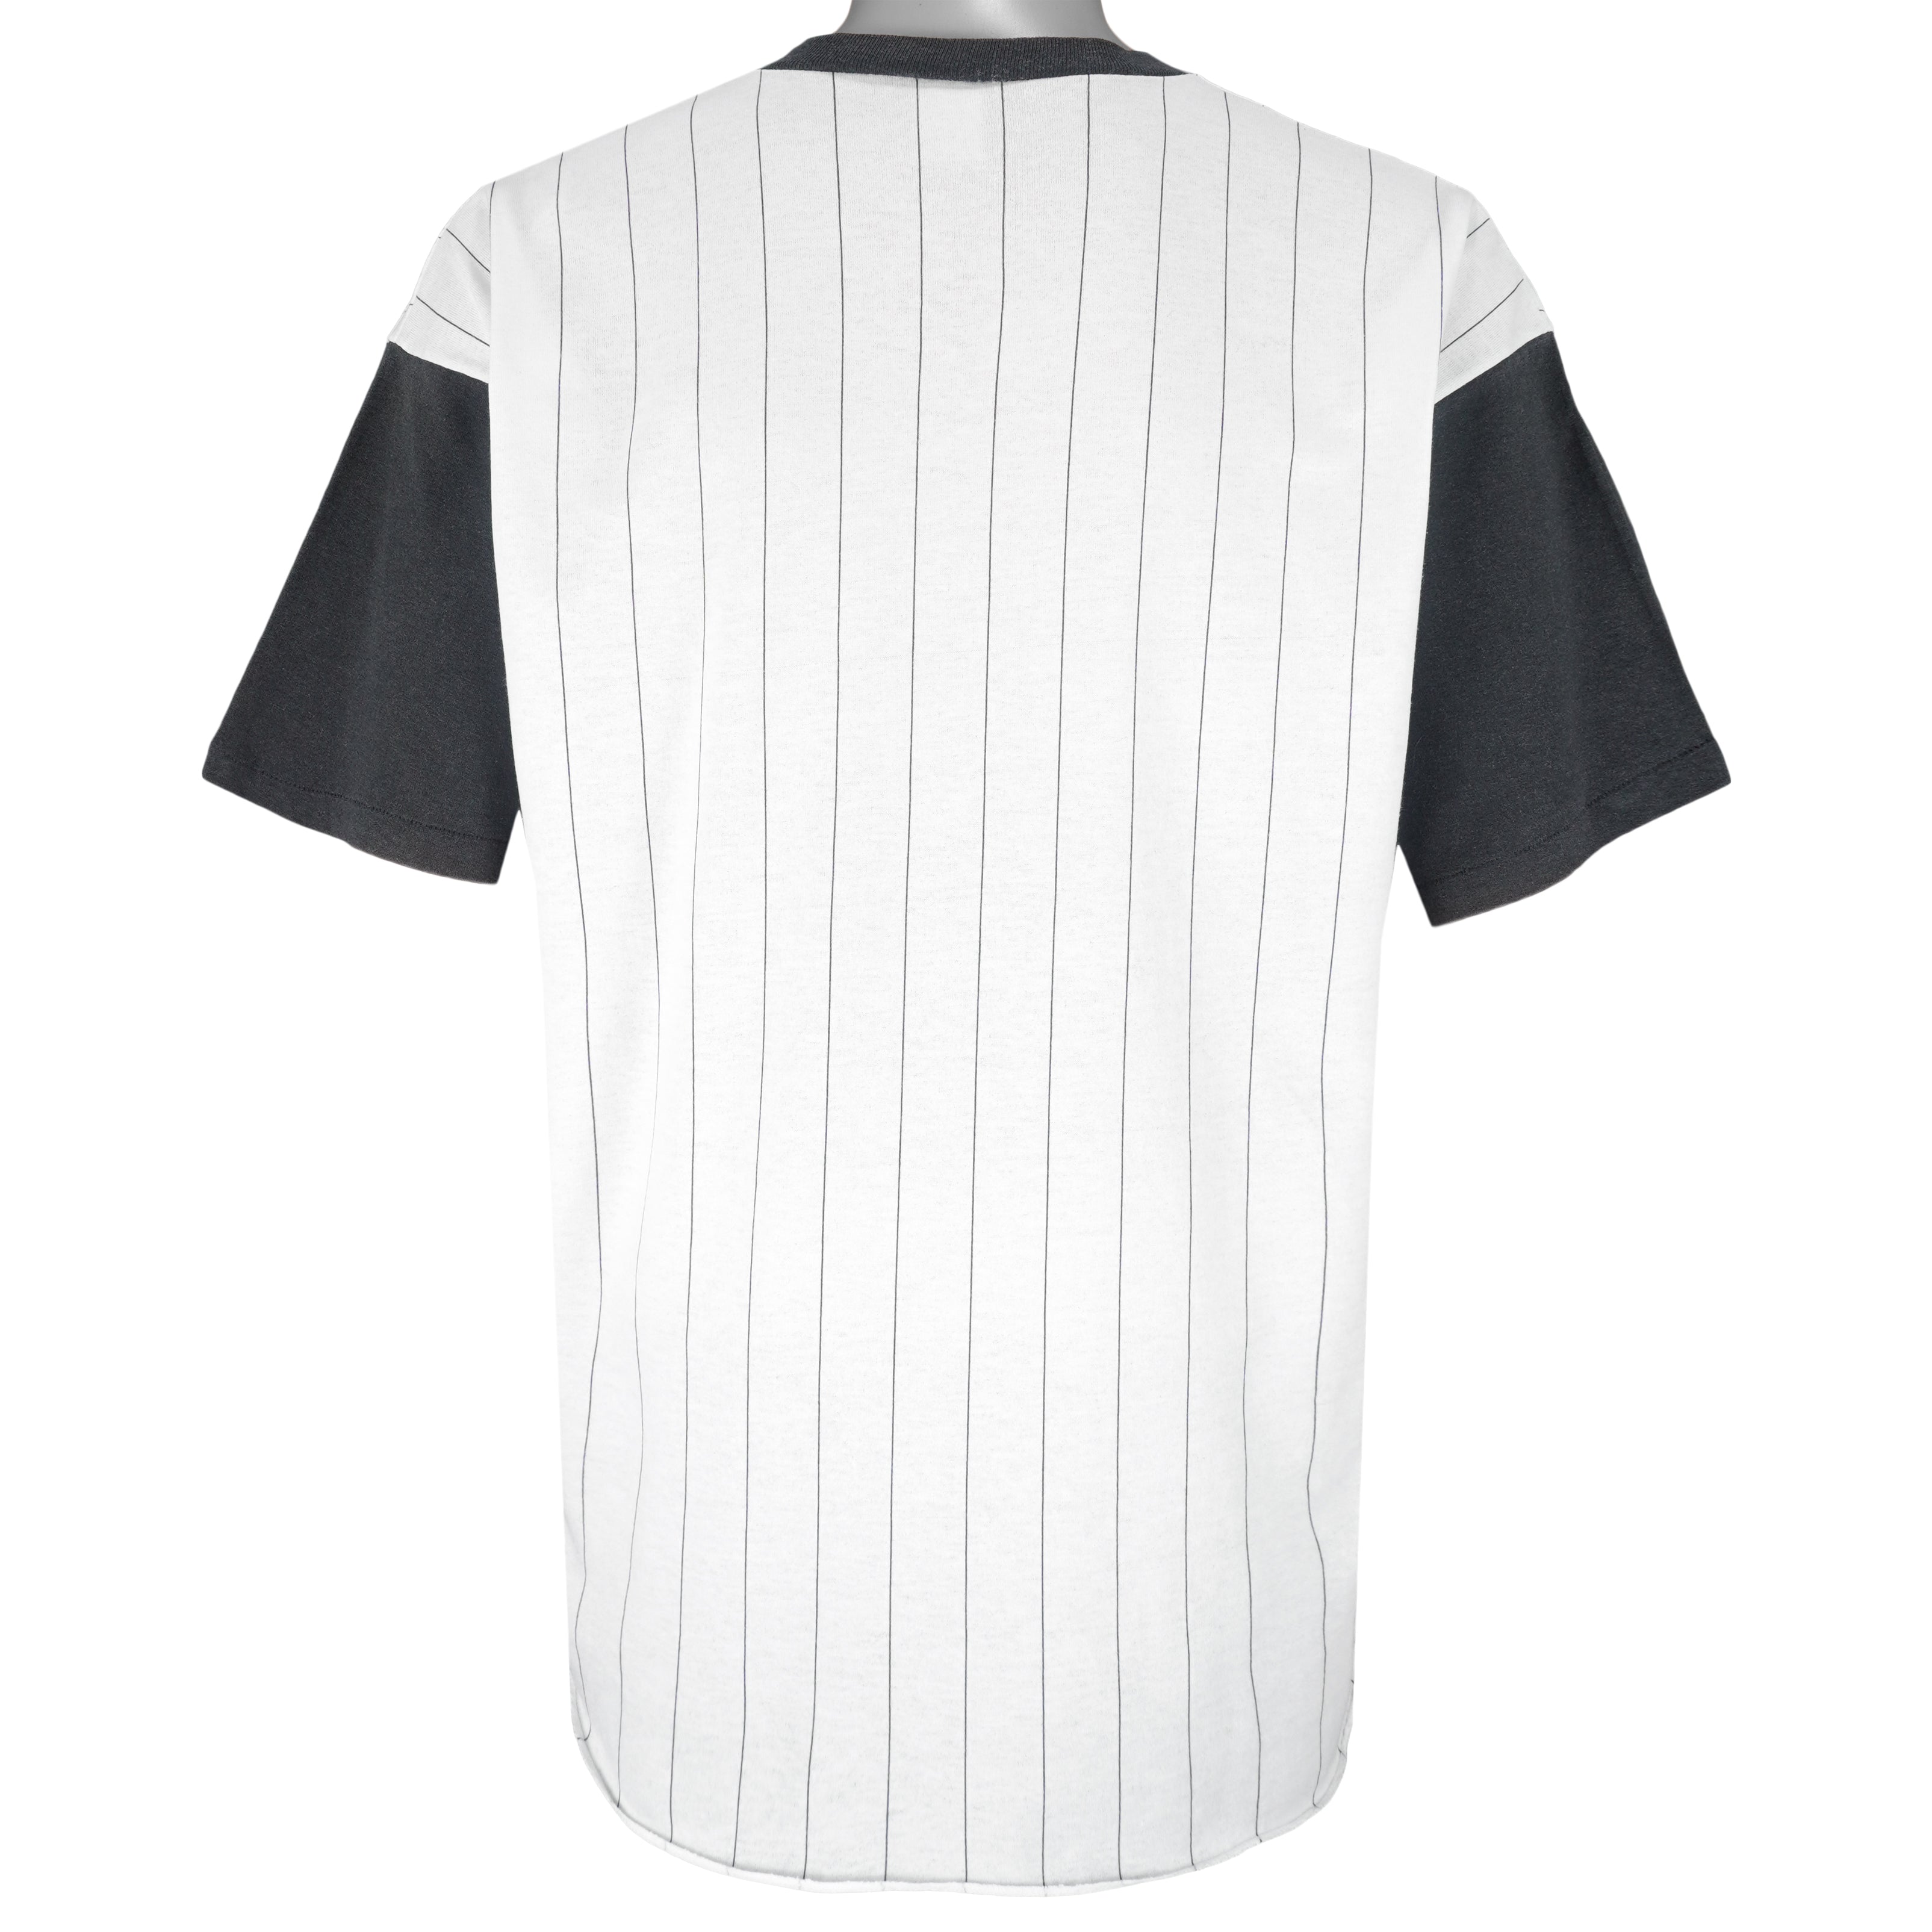 Vintage Baltimore Orioles MLB Baseball Jersey White Large